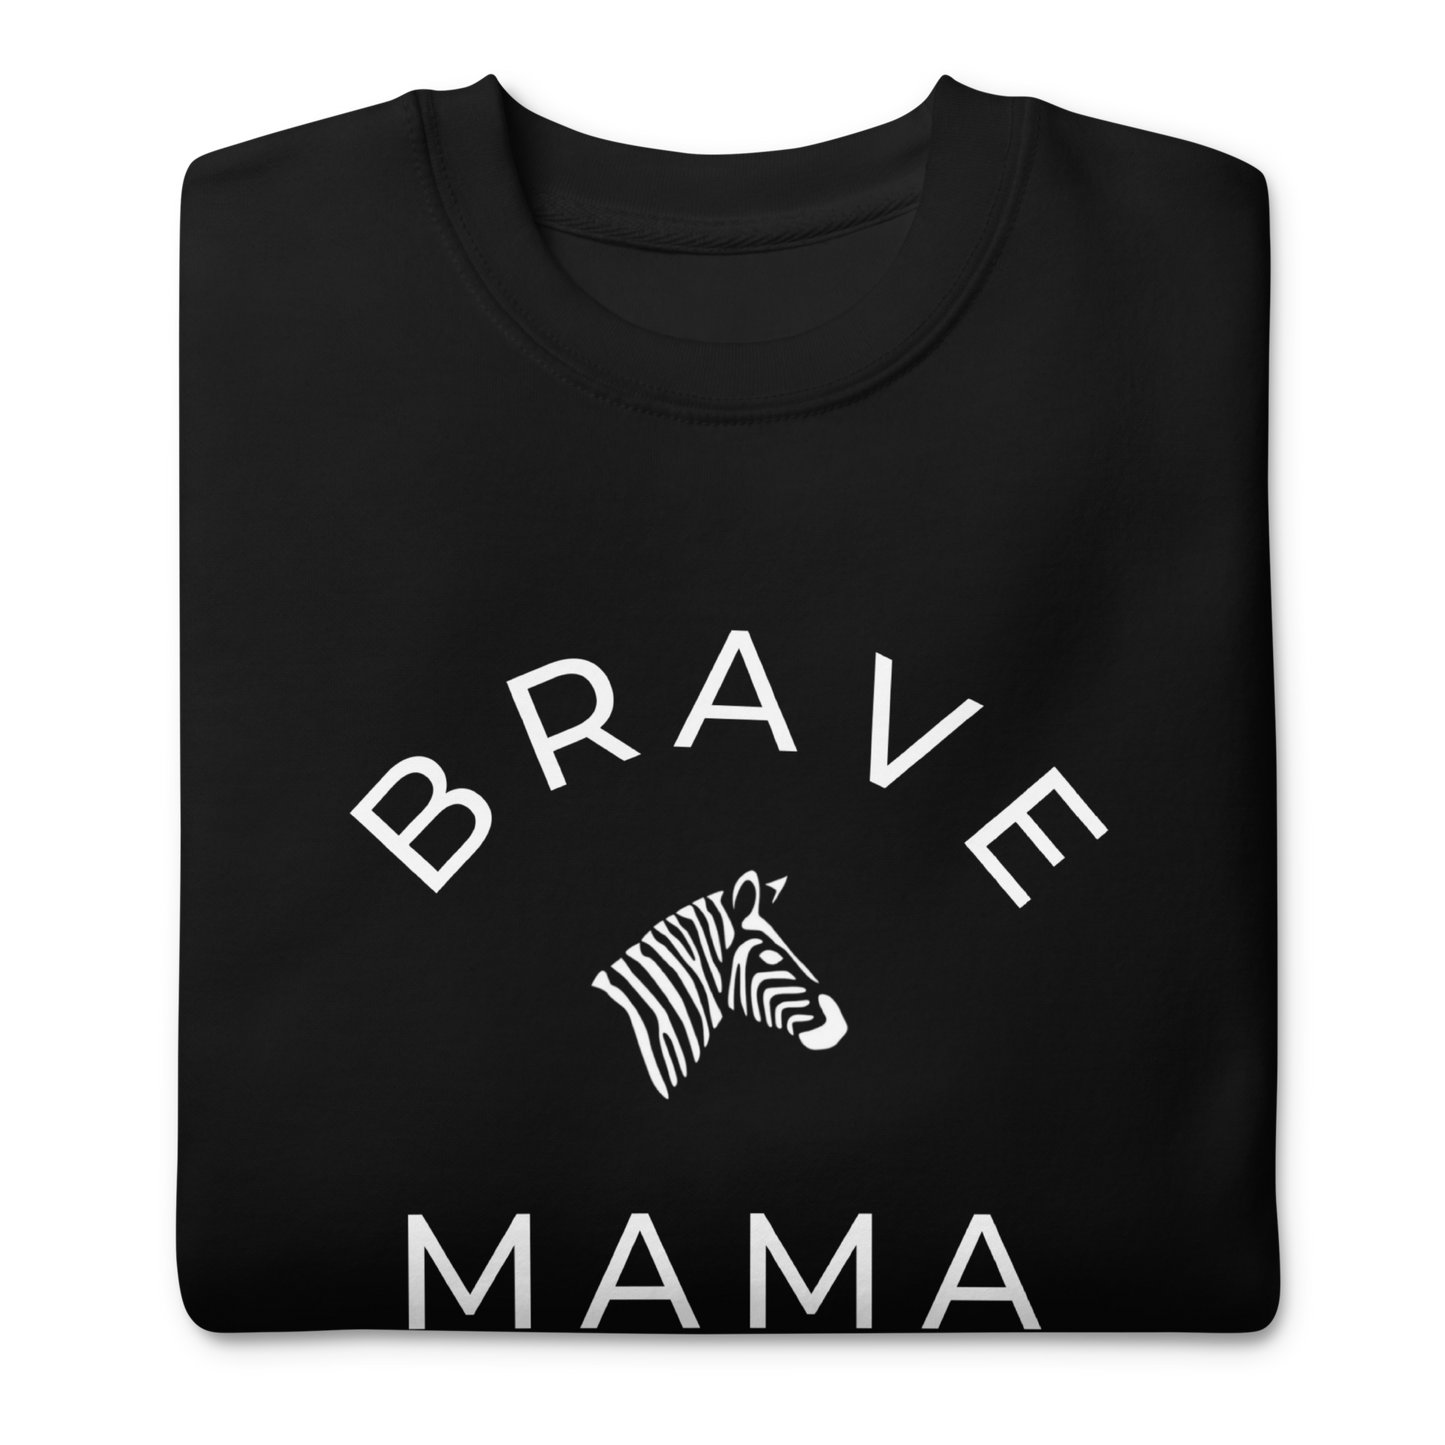 Premium "Brave Mama" Black Sweatshirt